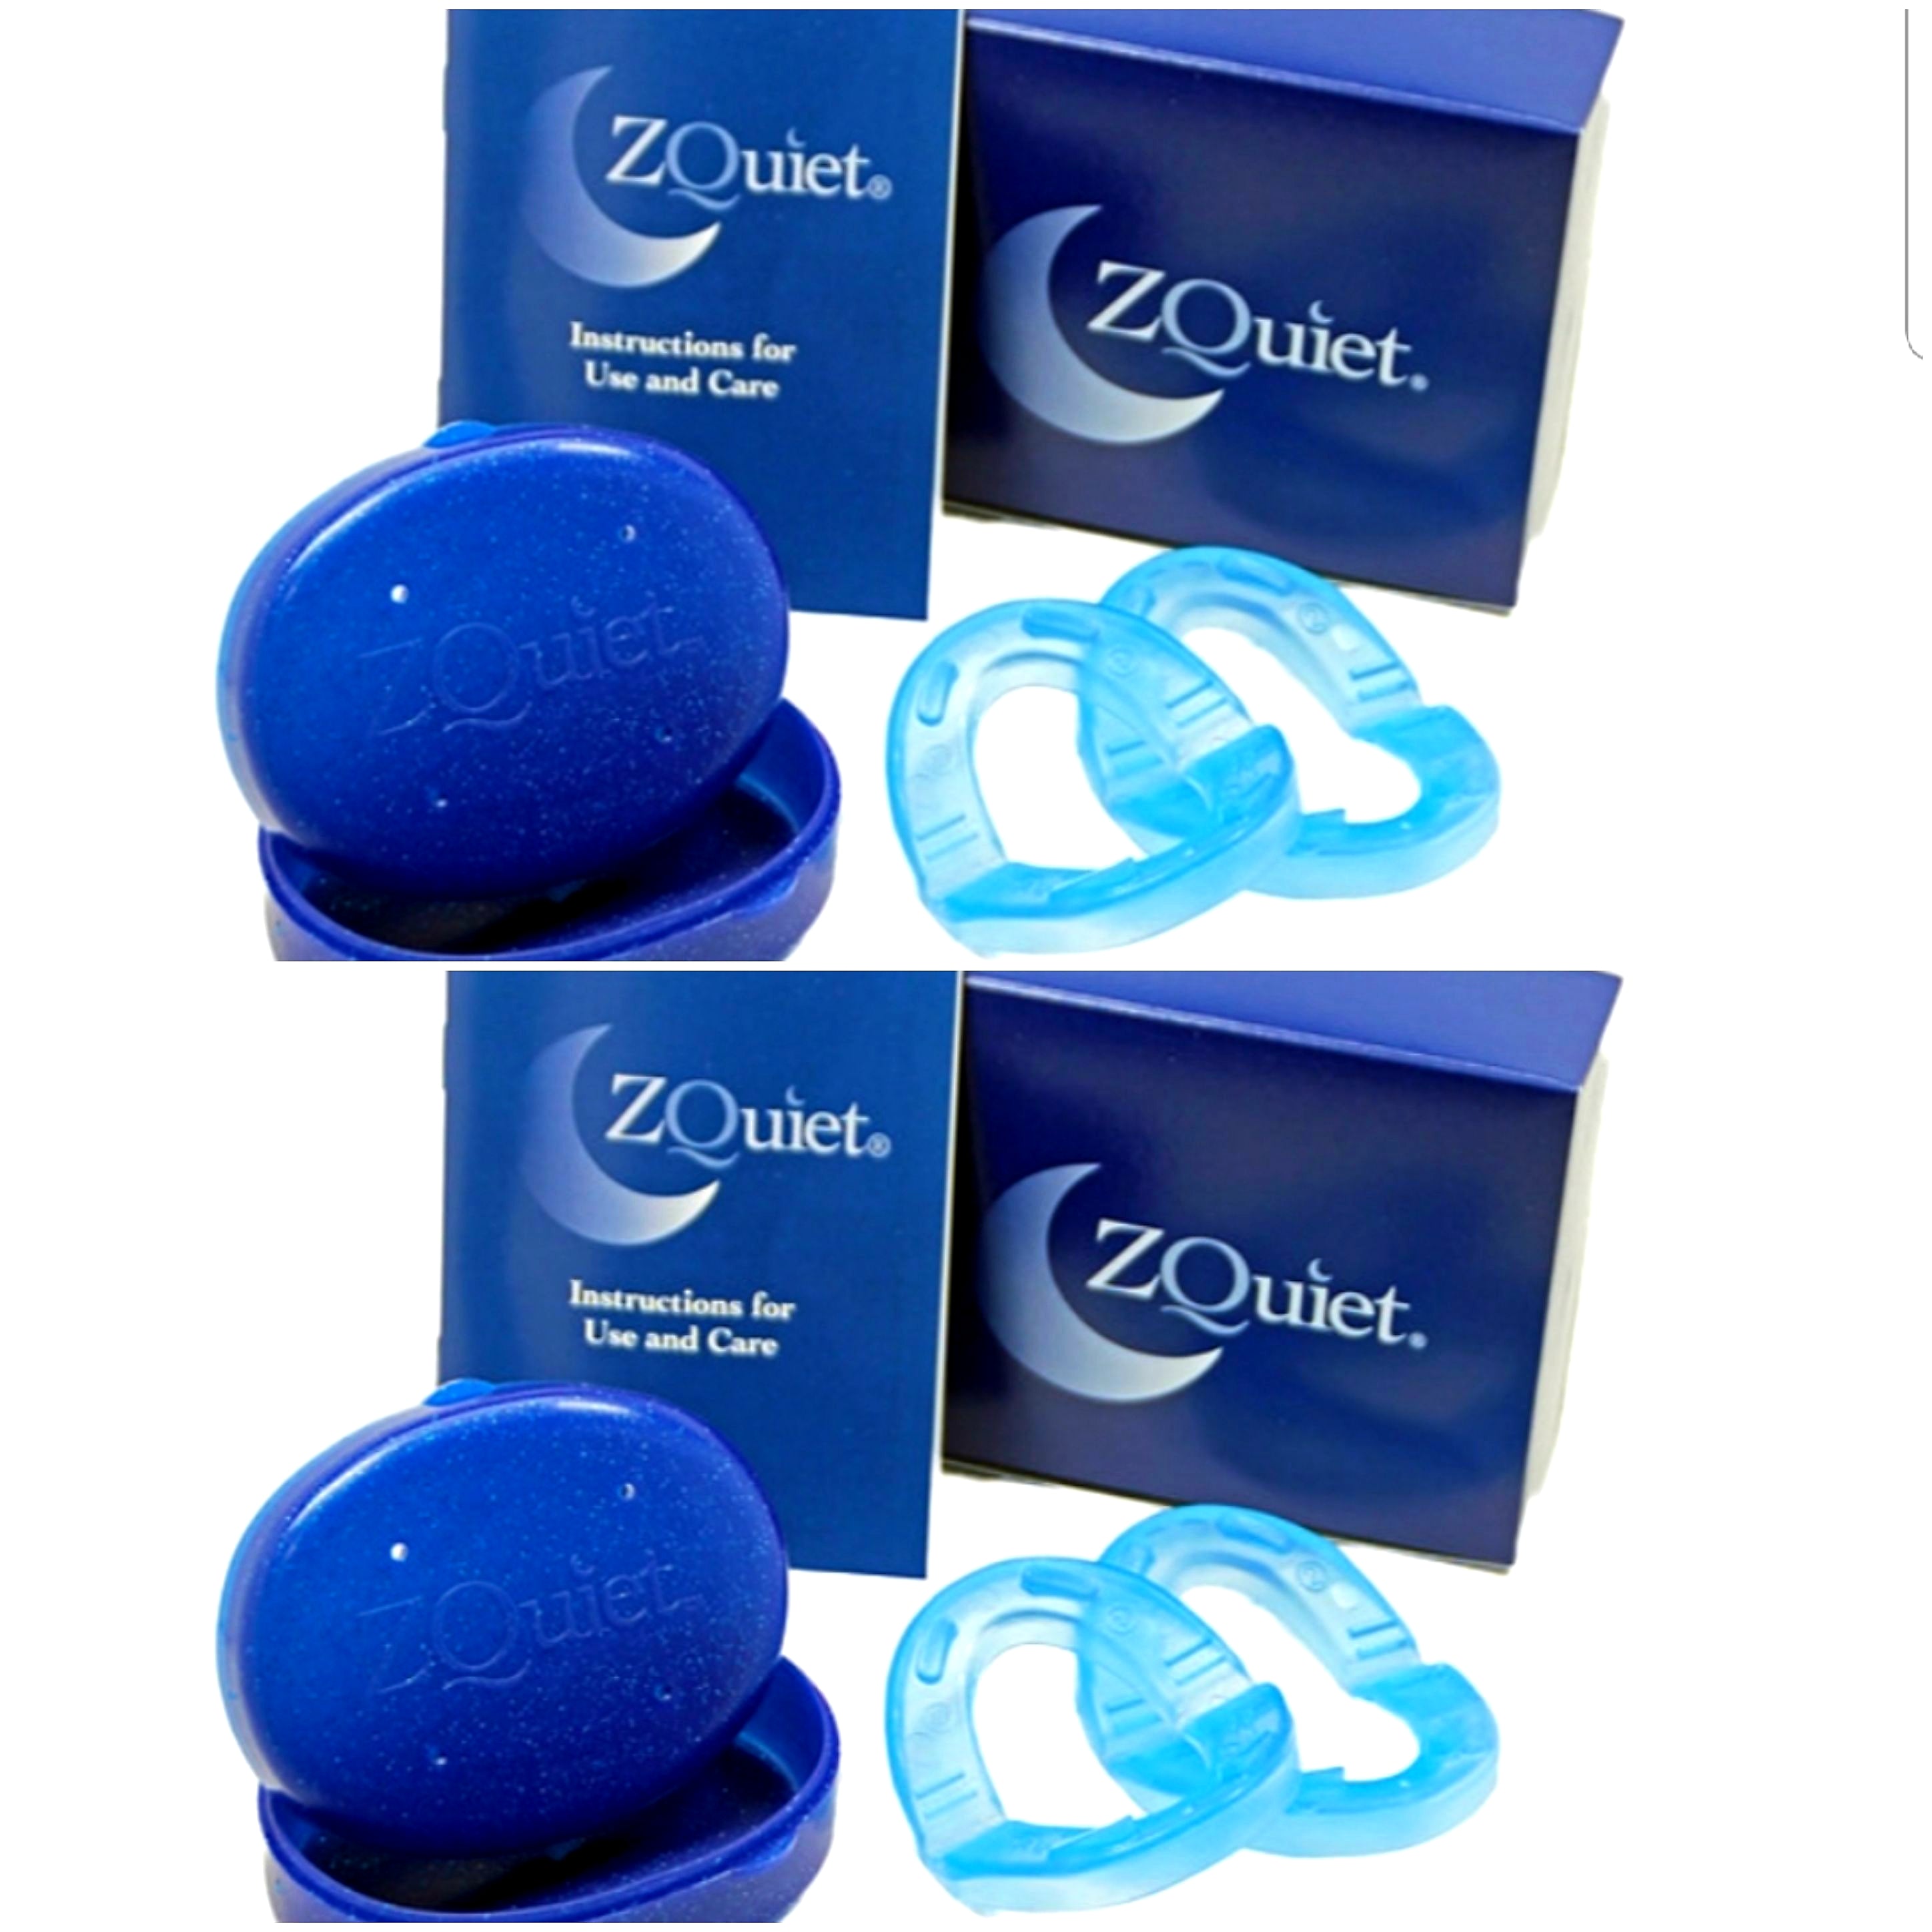 ZQuiet - 2 Starter Packs